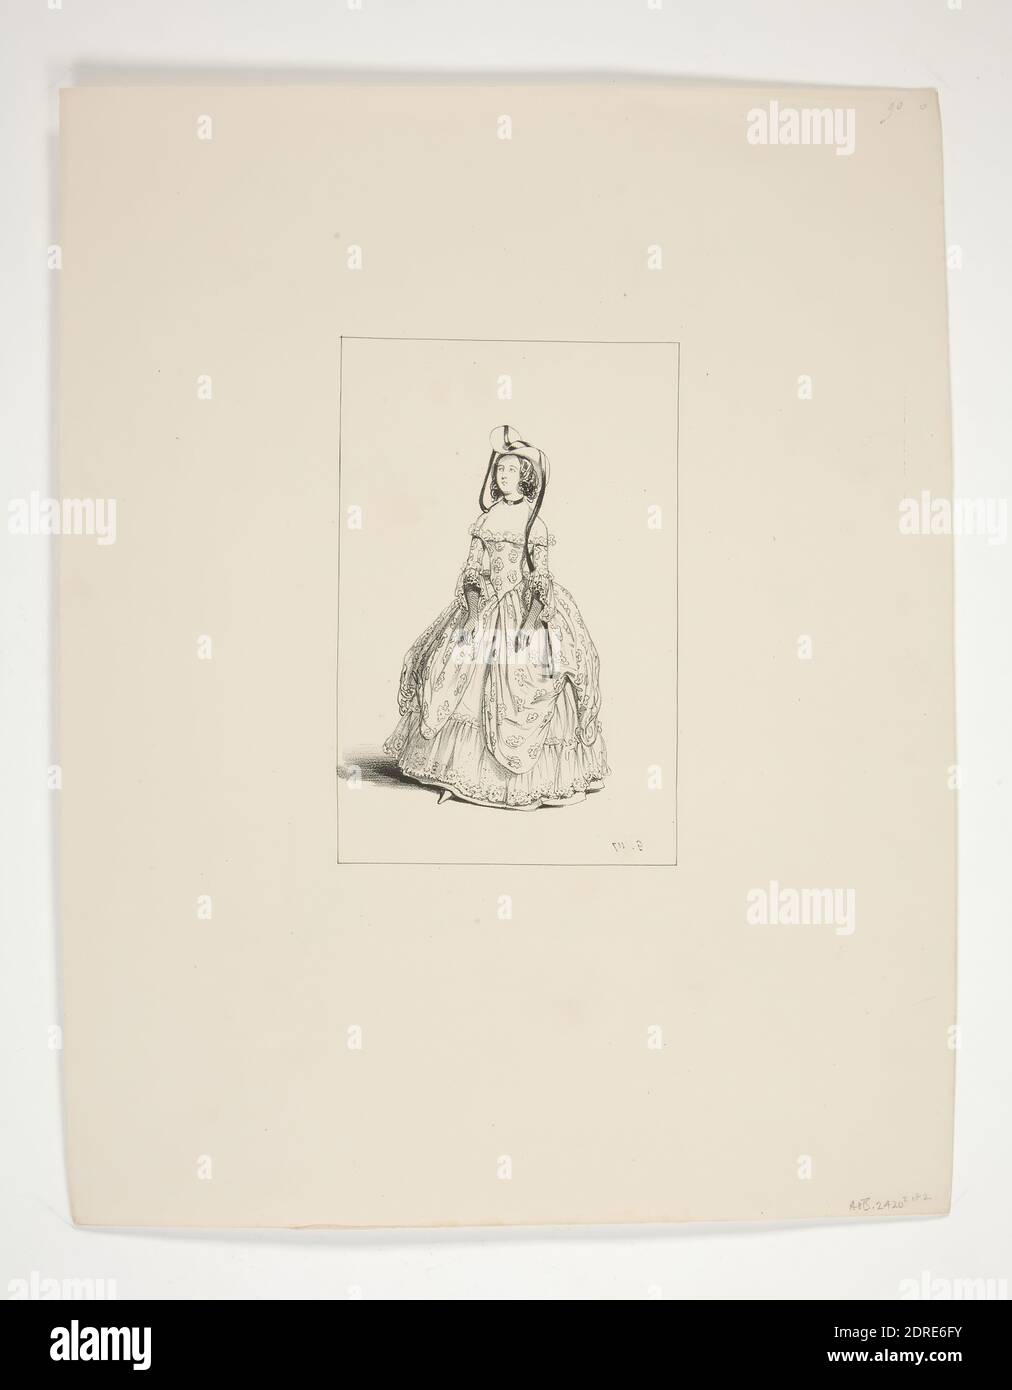 Artist: Paul Gavarni, French, 1804–1866, Costume de Claire, jouee par M’le Rougemont, Lithograph, French, 19th century, Works on Paper - Prints Stock Photo